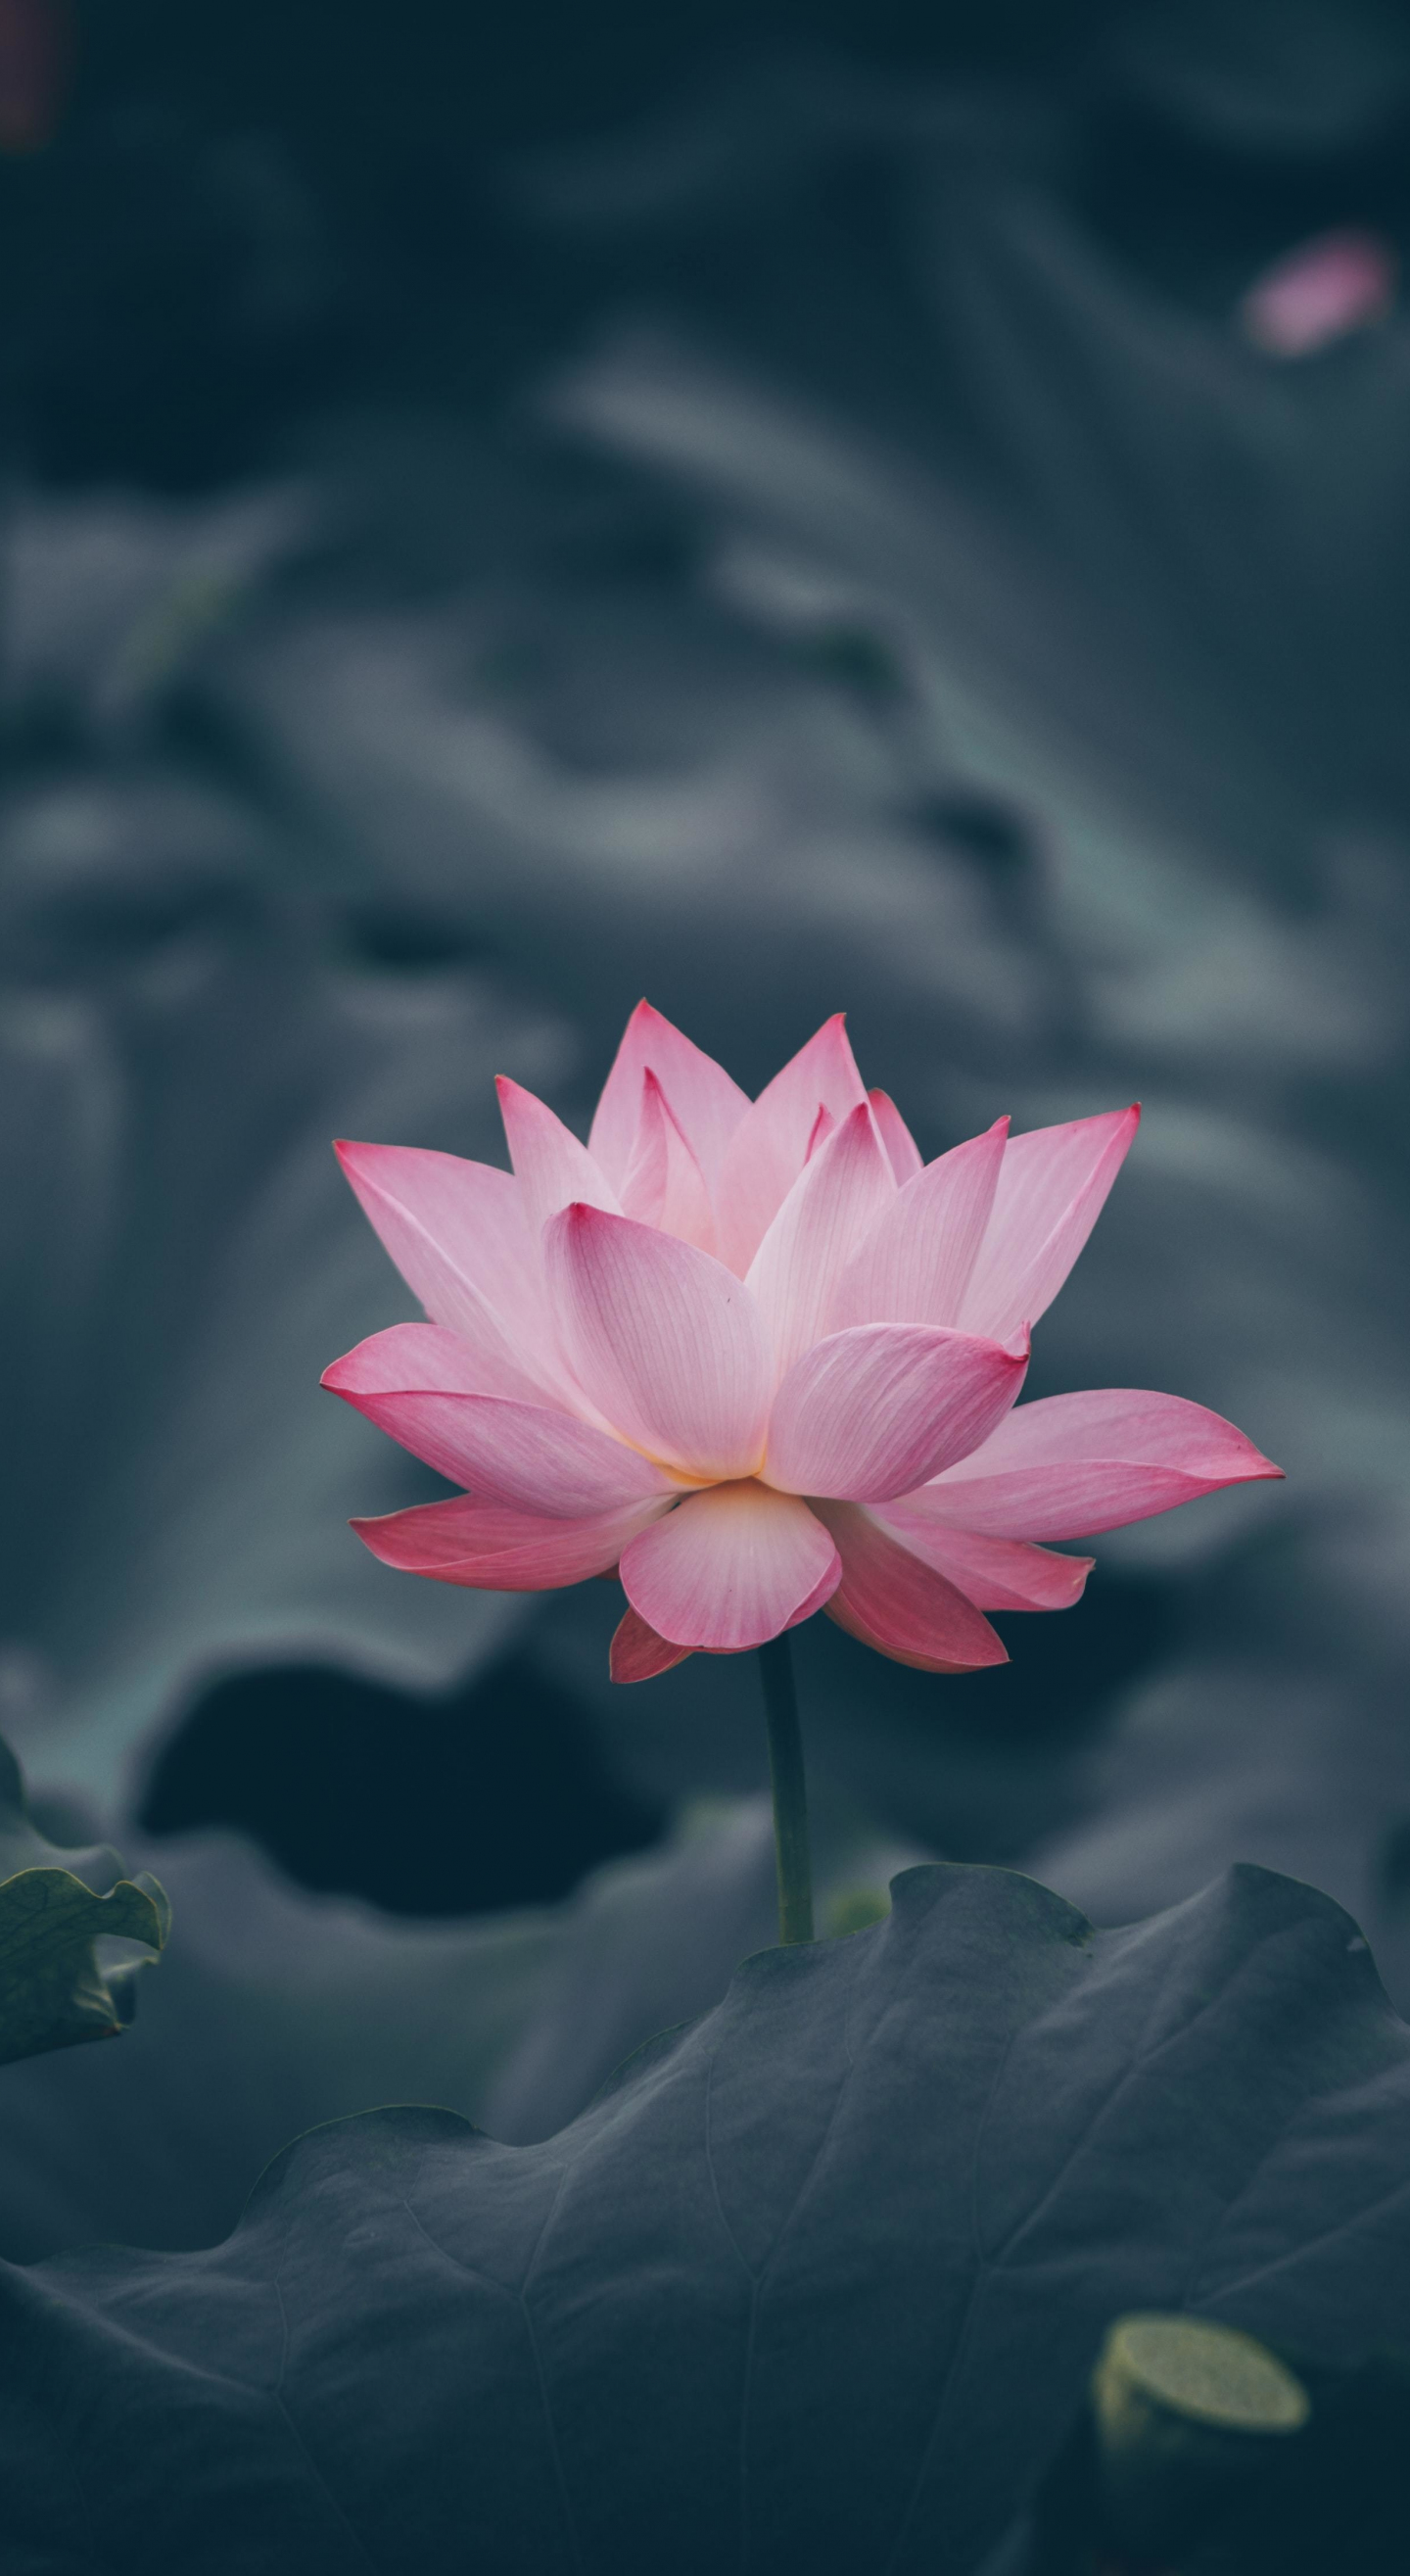 Download wallpaper 1440x2630 pink lotus, flower, bloom, samsung galaxy note  8, 1440x2630 hd background, 25554